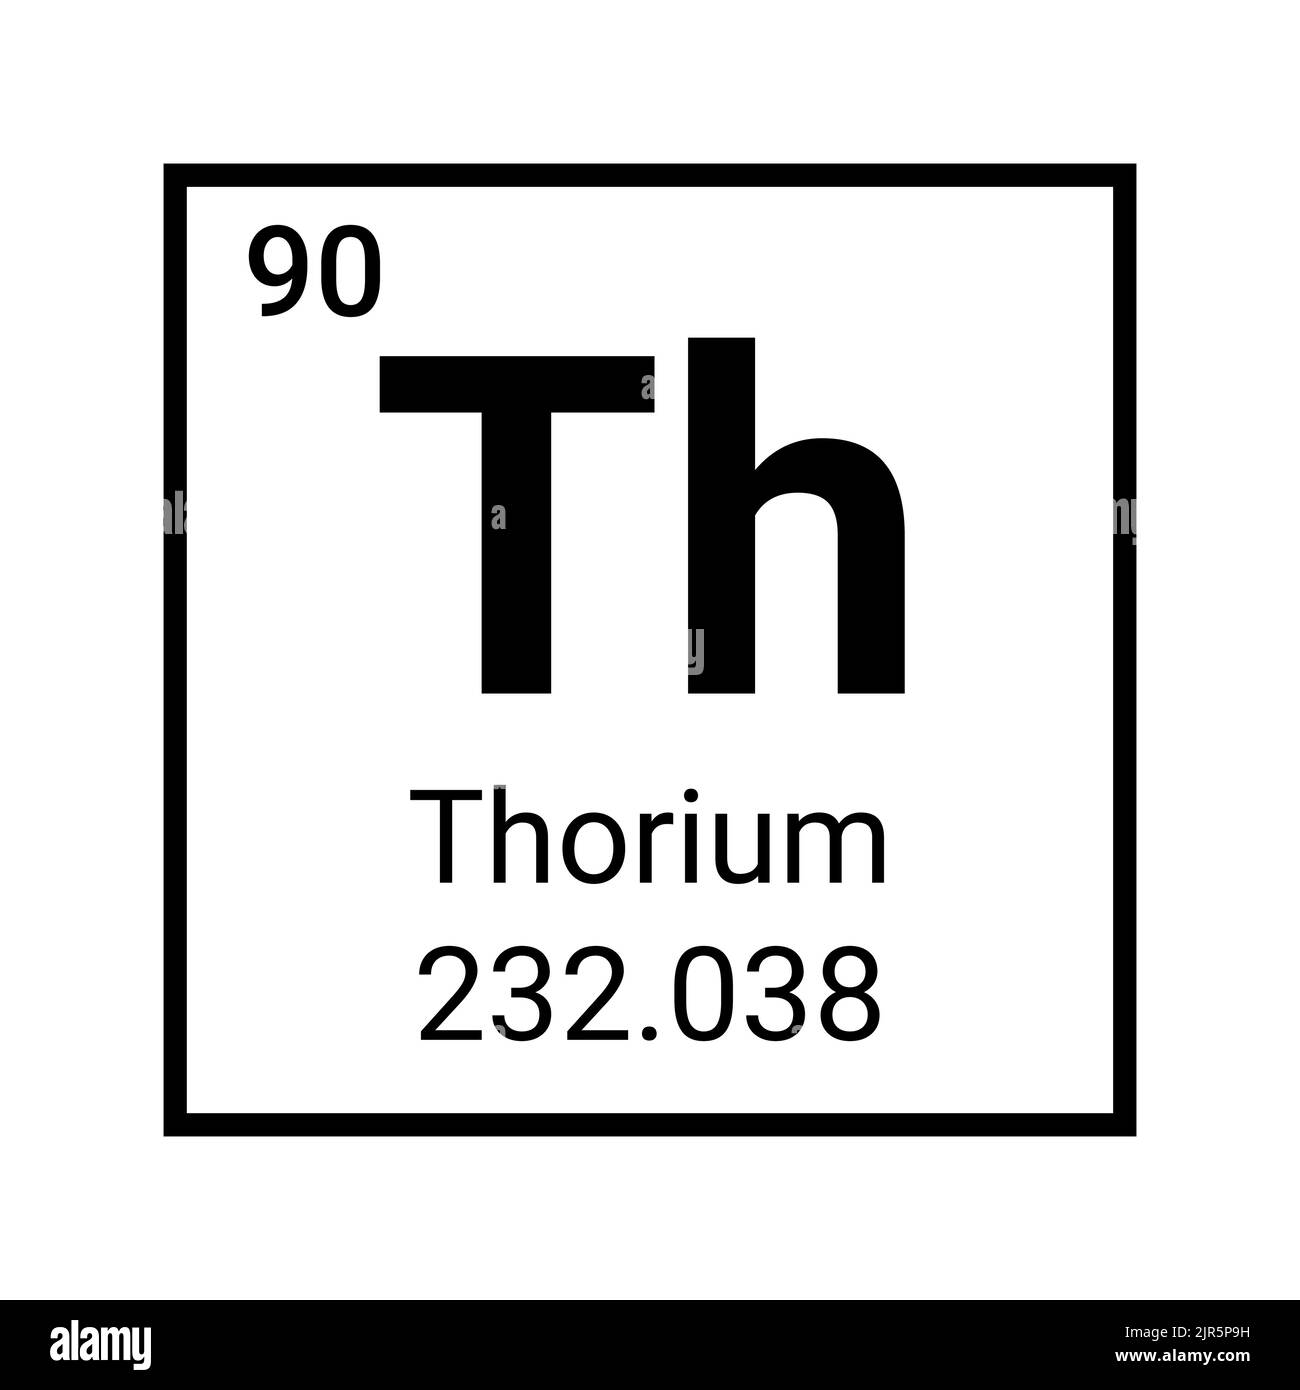 Thorium periodic table element chemistry symbol atom icon. Stock Vector